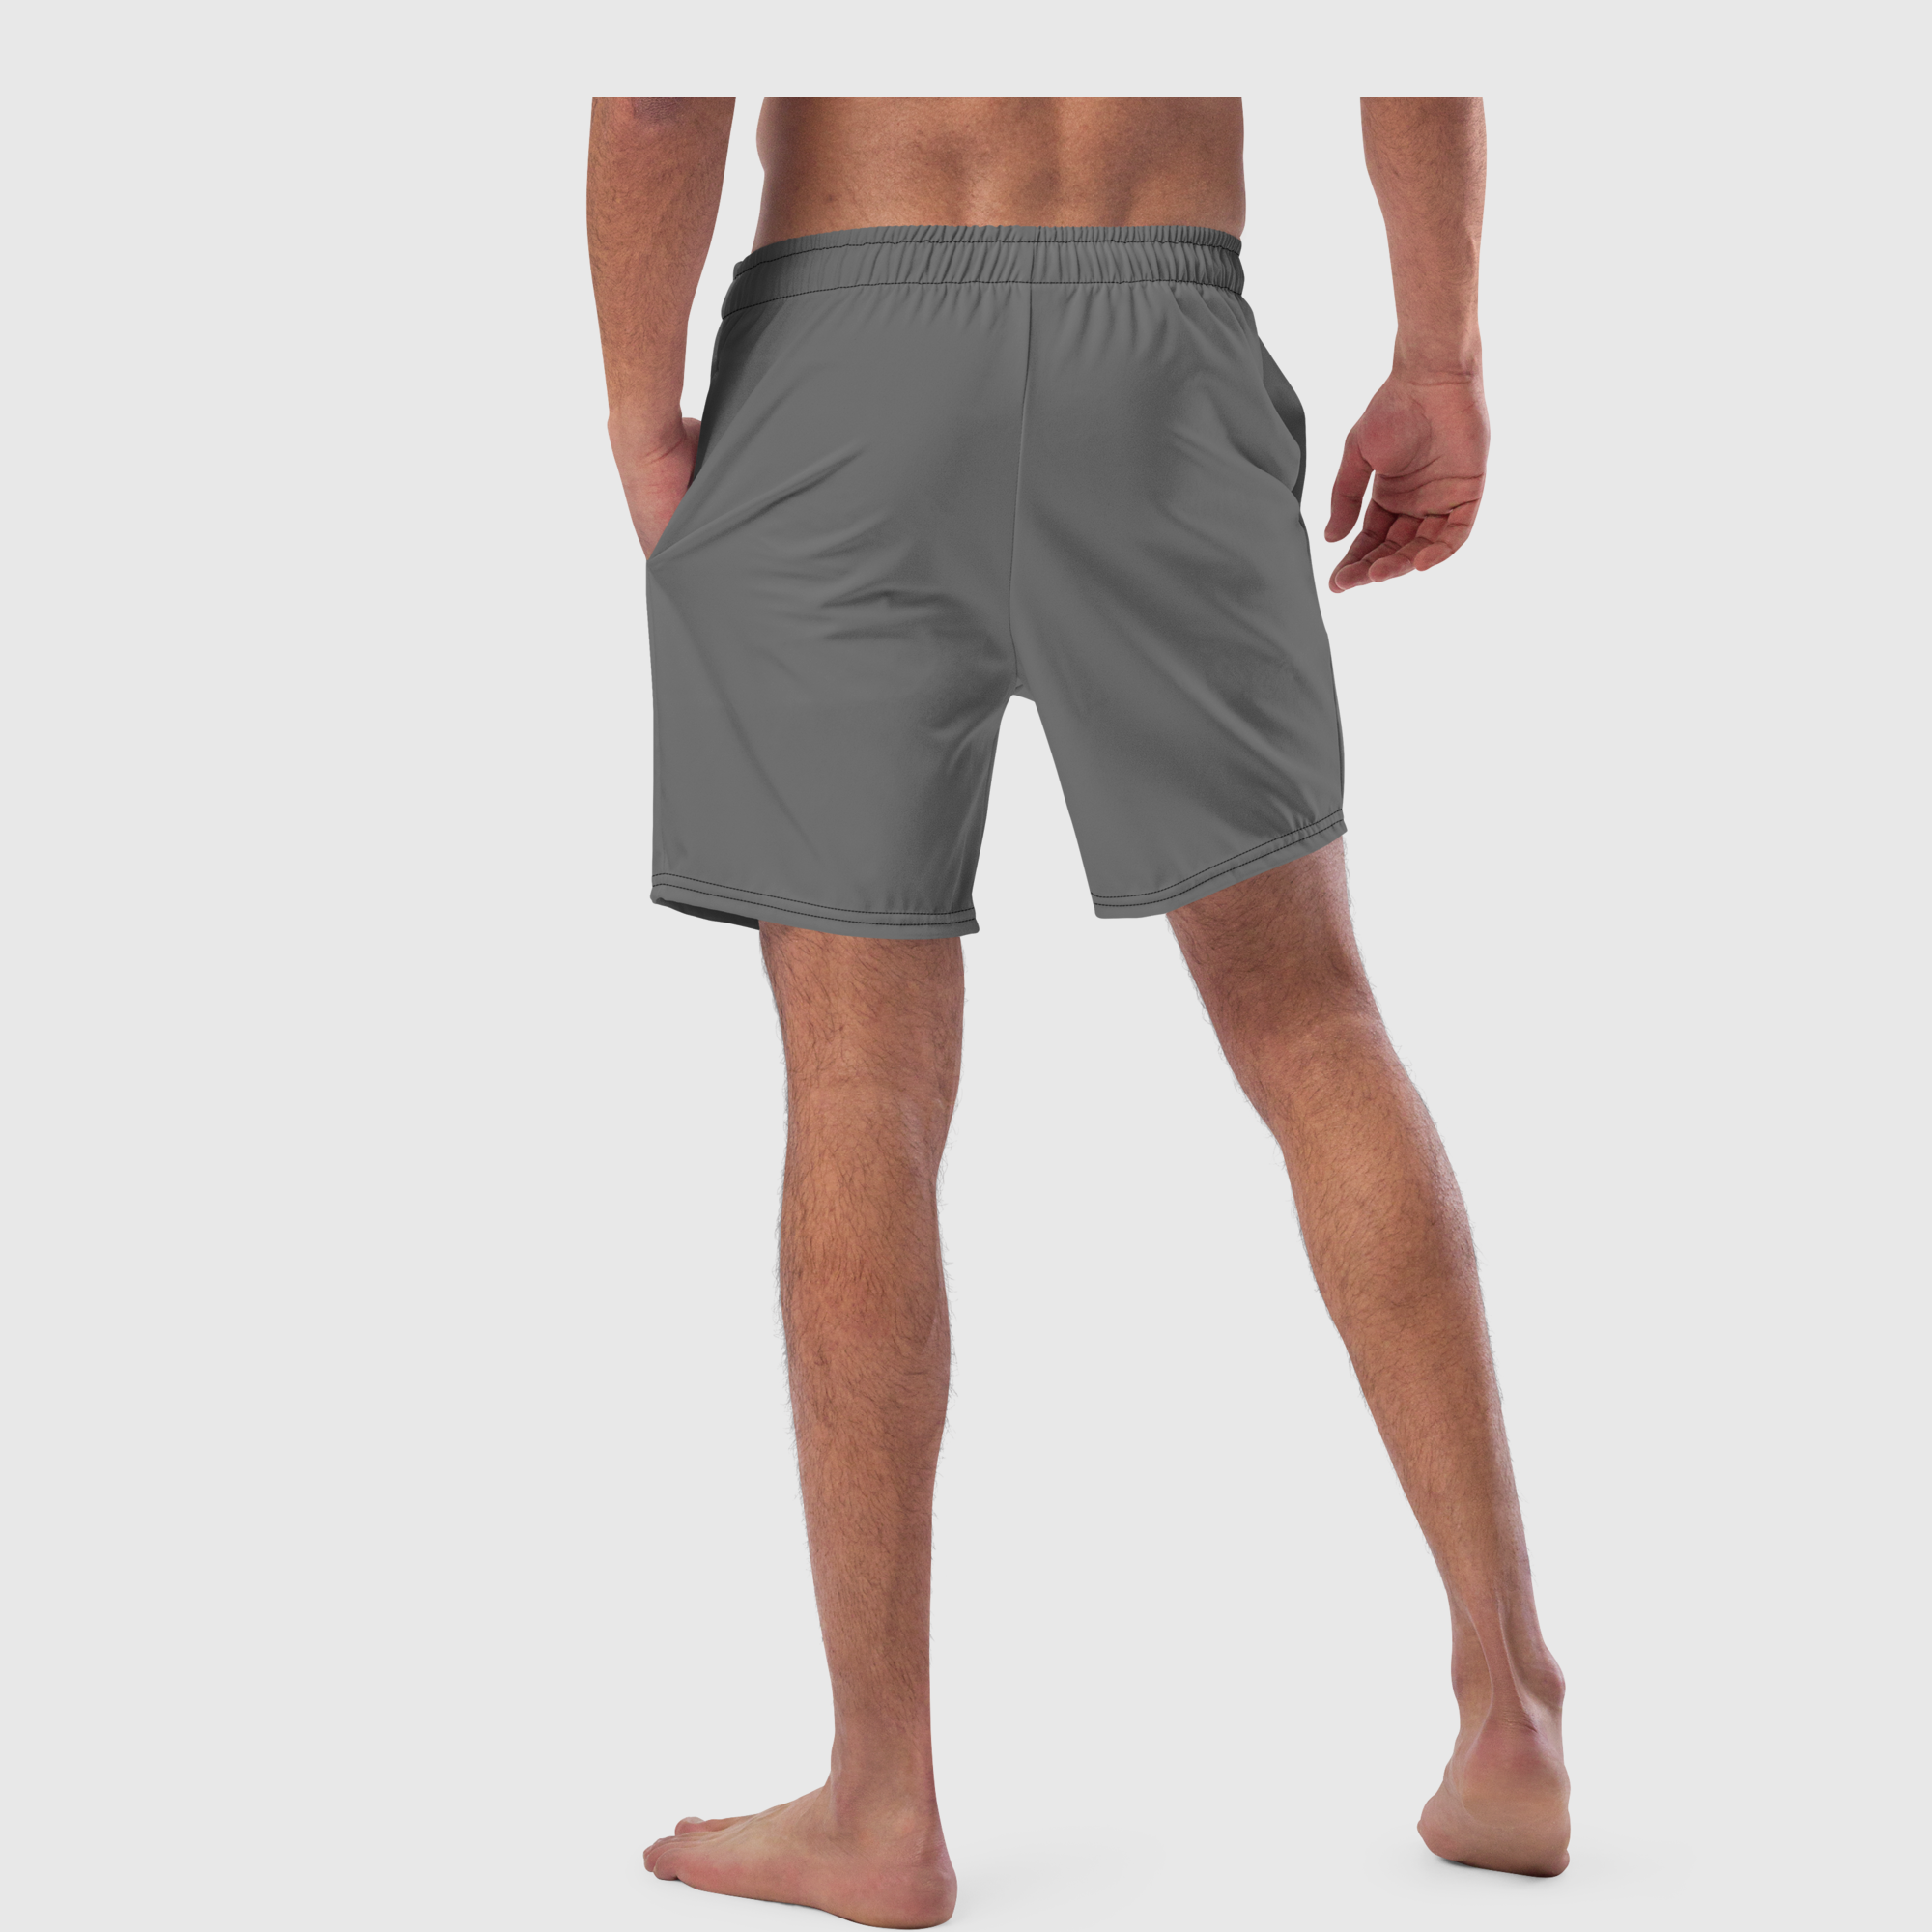 Men's swim trunks - Grey